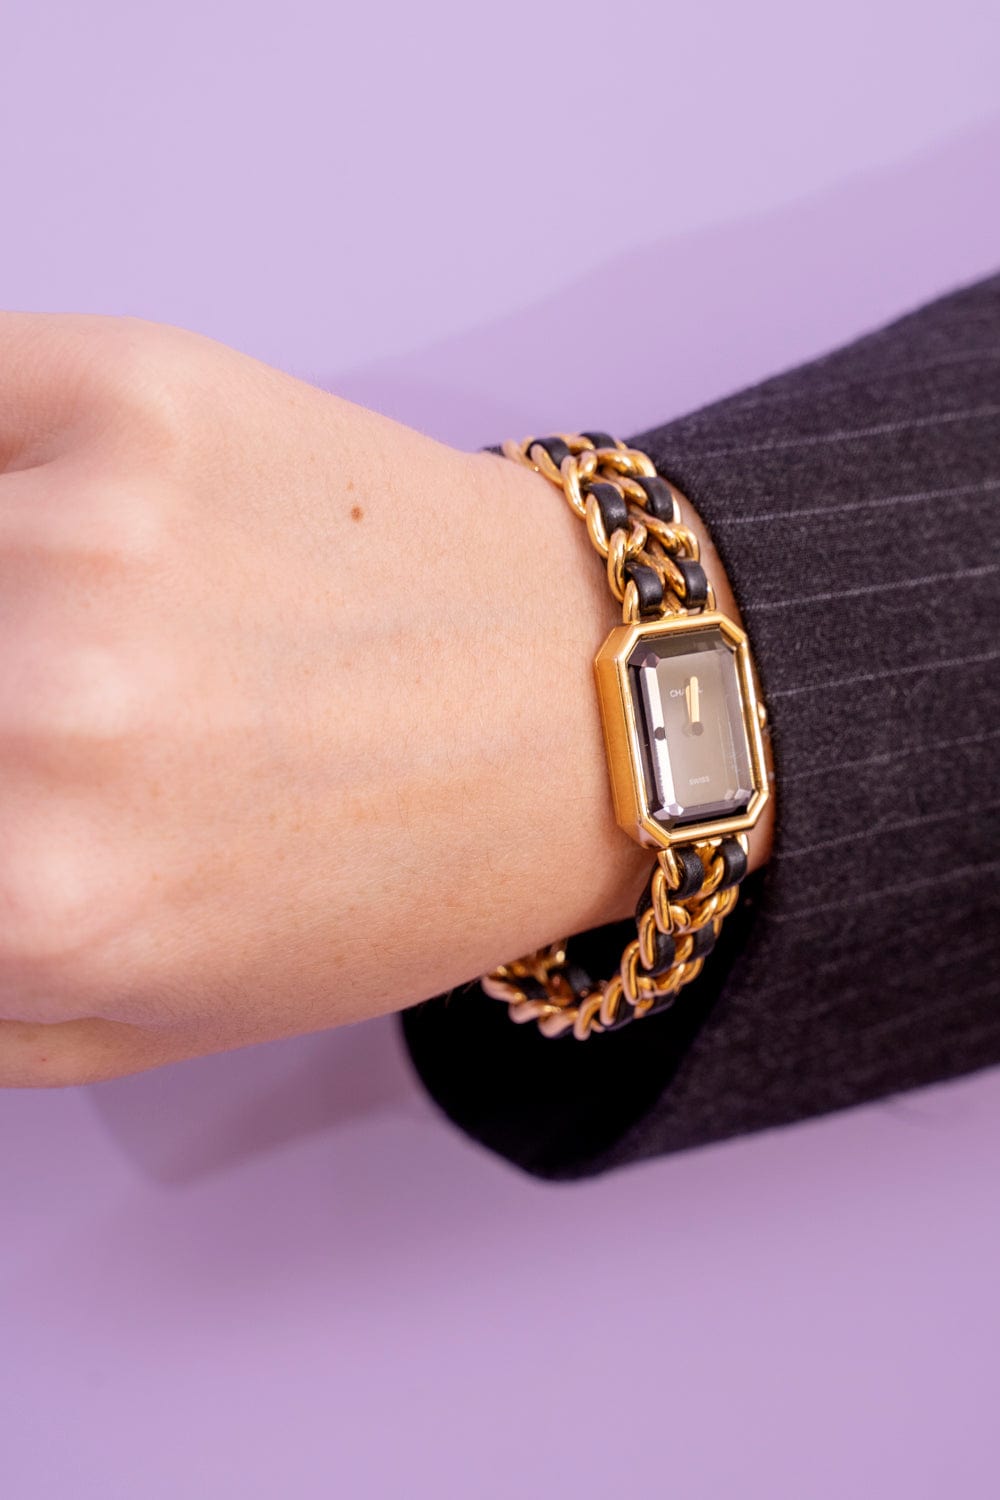 Chanel Premiere diamond watch 18K 750 H0113 gold